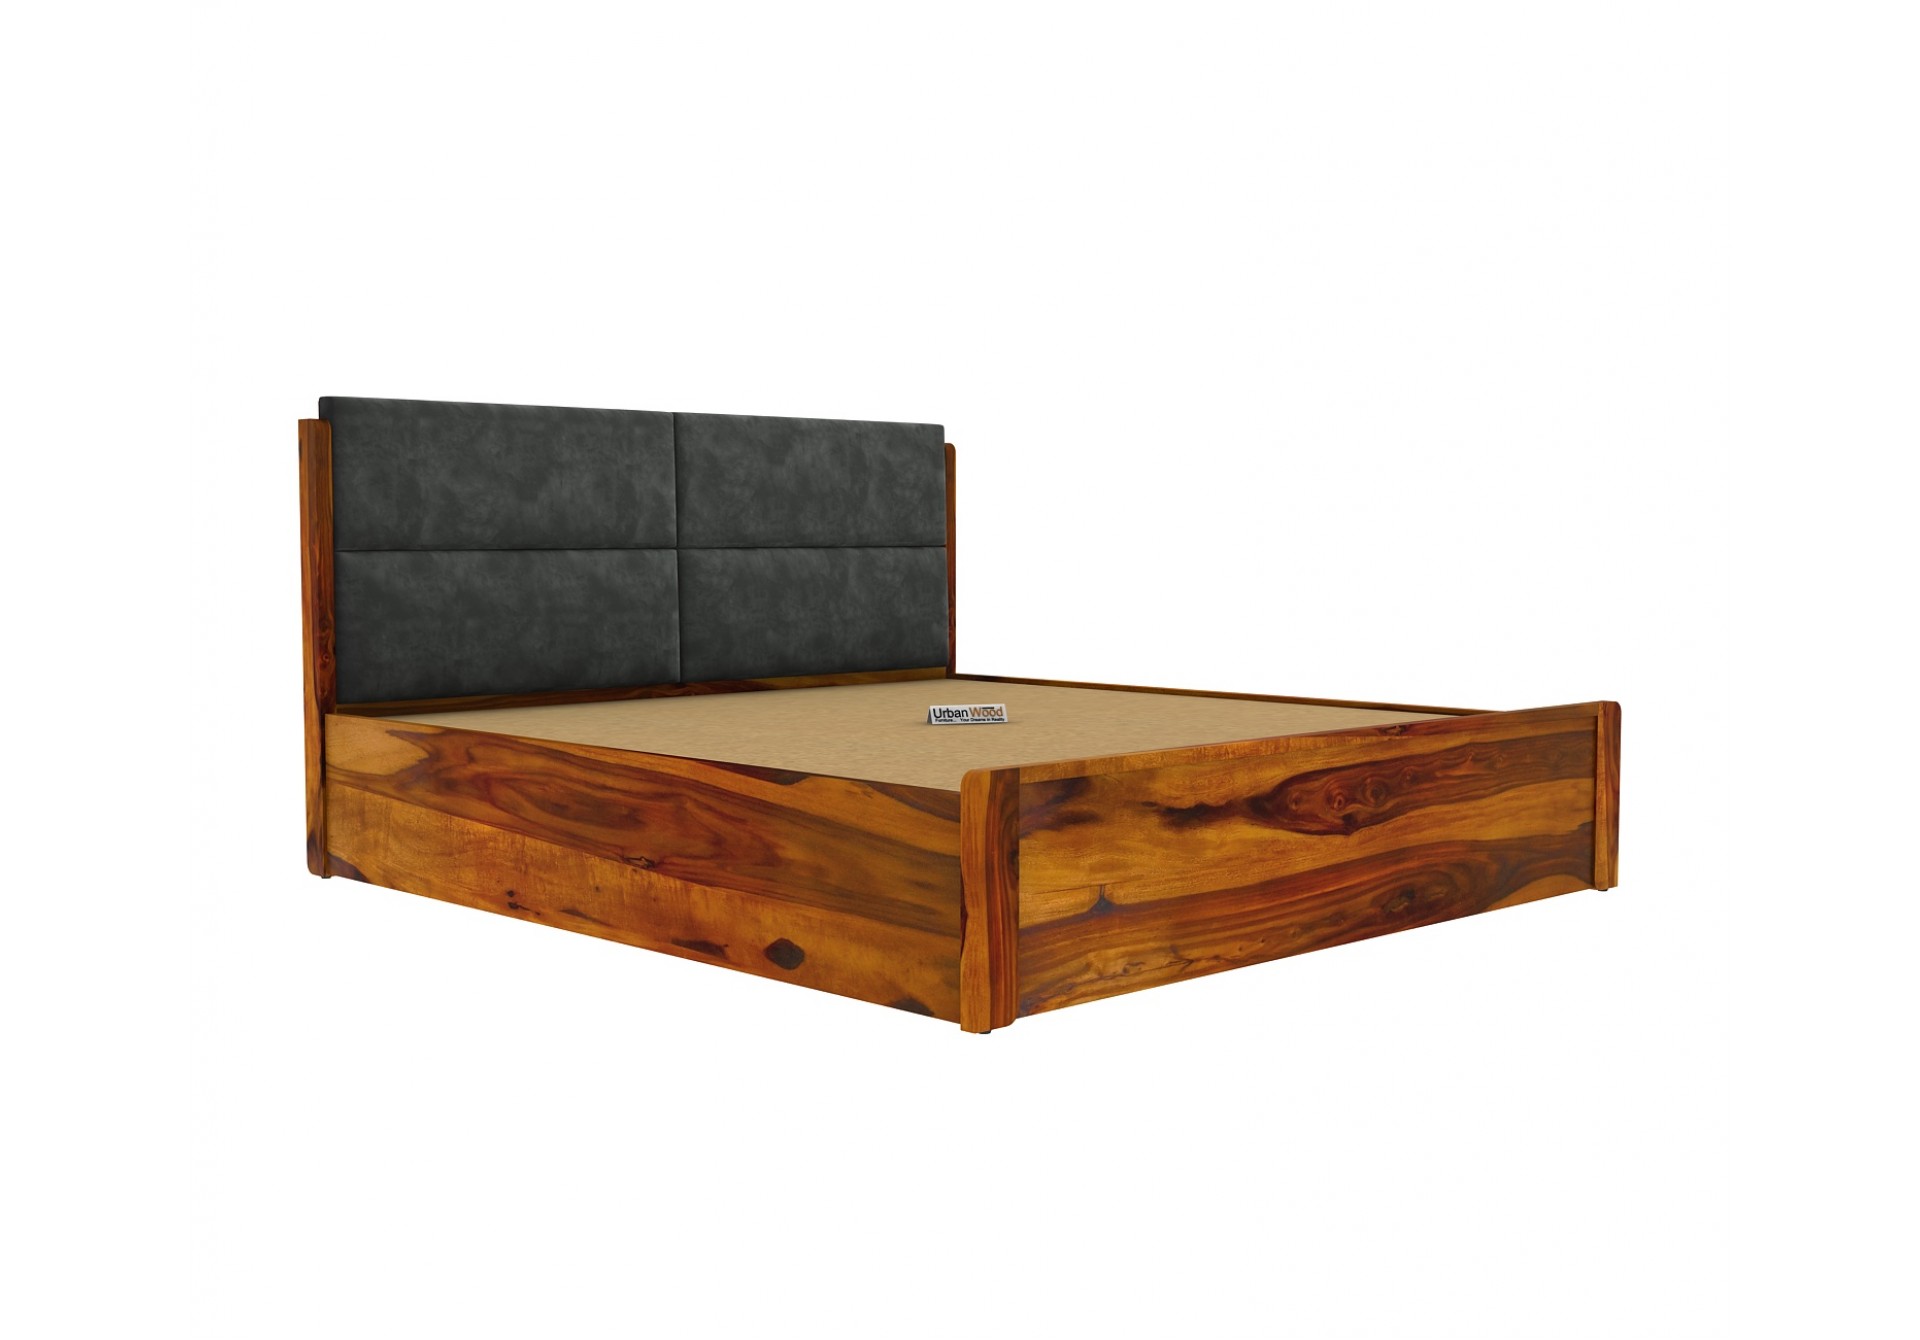 Luxe Urbanwood Exclusive Hydraulic Storage Bed ( King Size, Honey Finish )